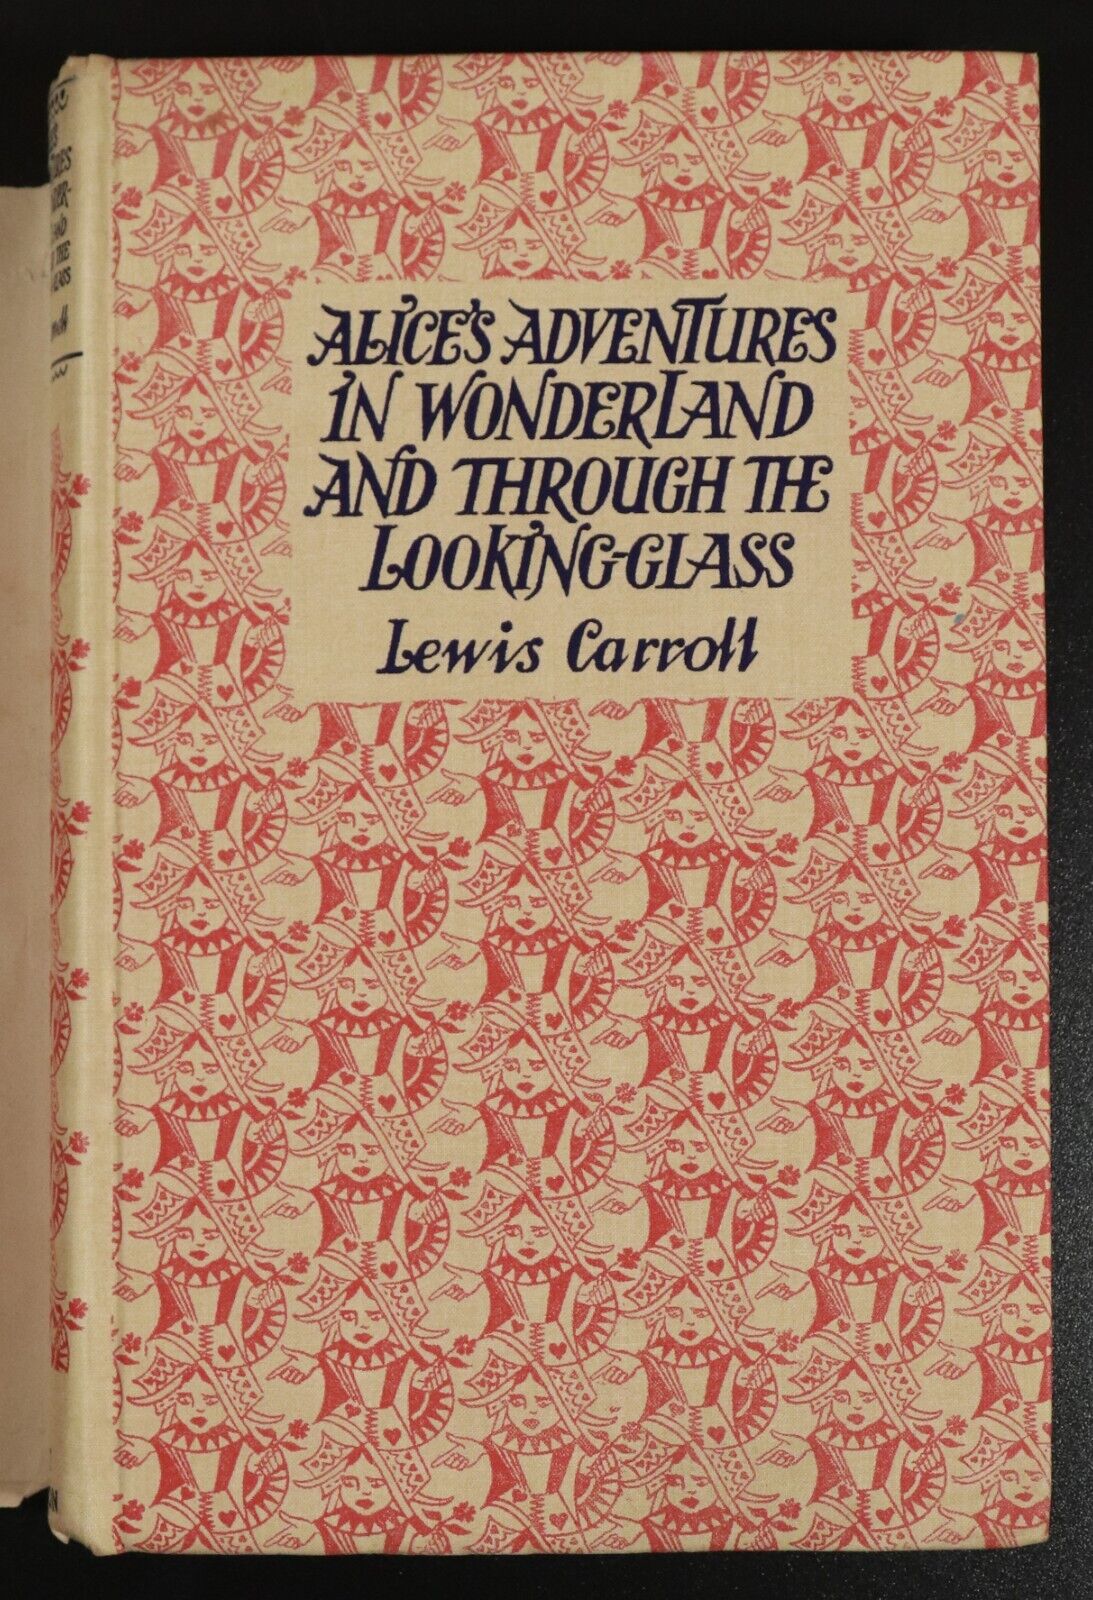 1954 Alice's Adventures In Wonderland L. Carroll Antique Fiction Book J. Tenniel - 0